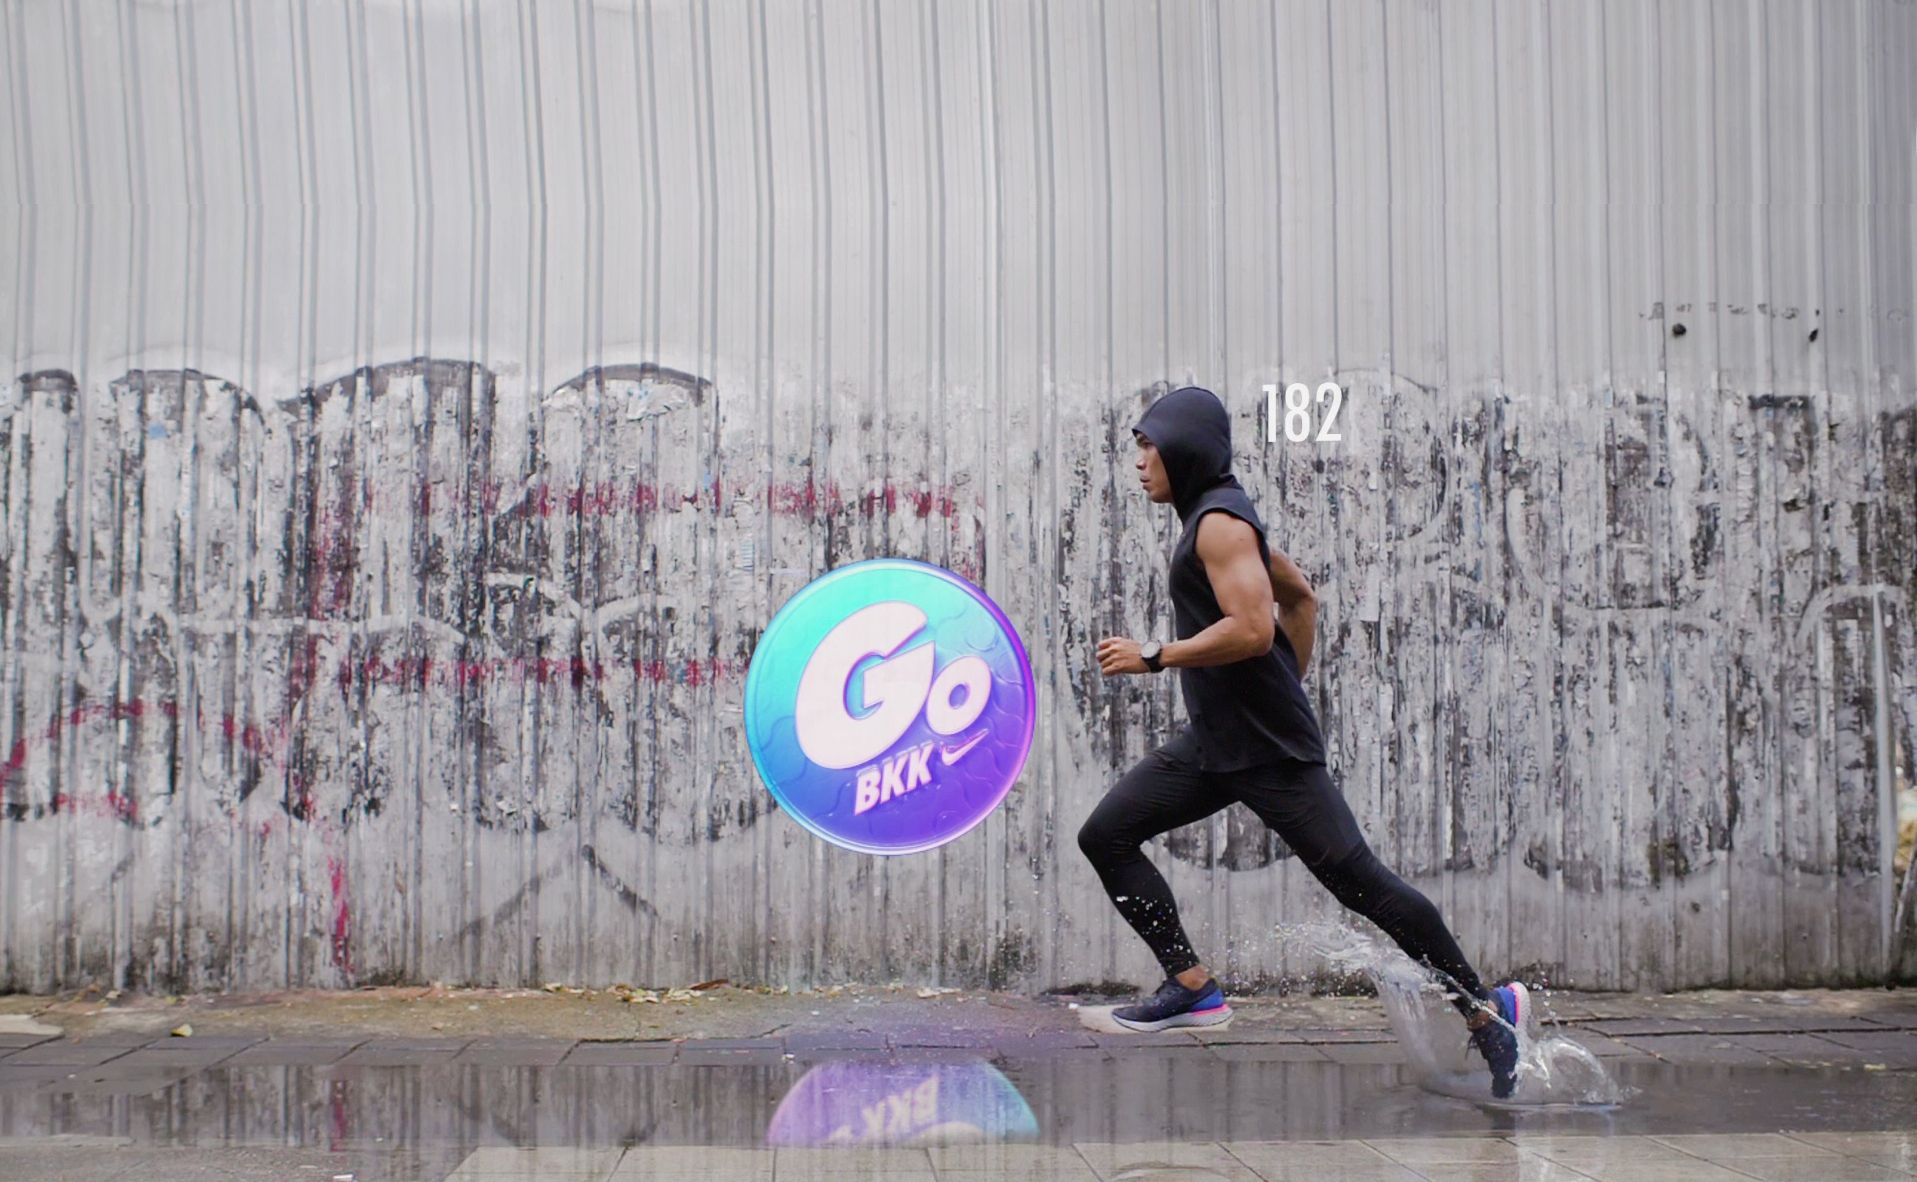 heroico Recuperar flotador Nike Go BKK - Turning the city of Bangkok into a real-time running game